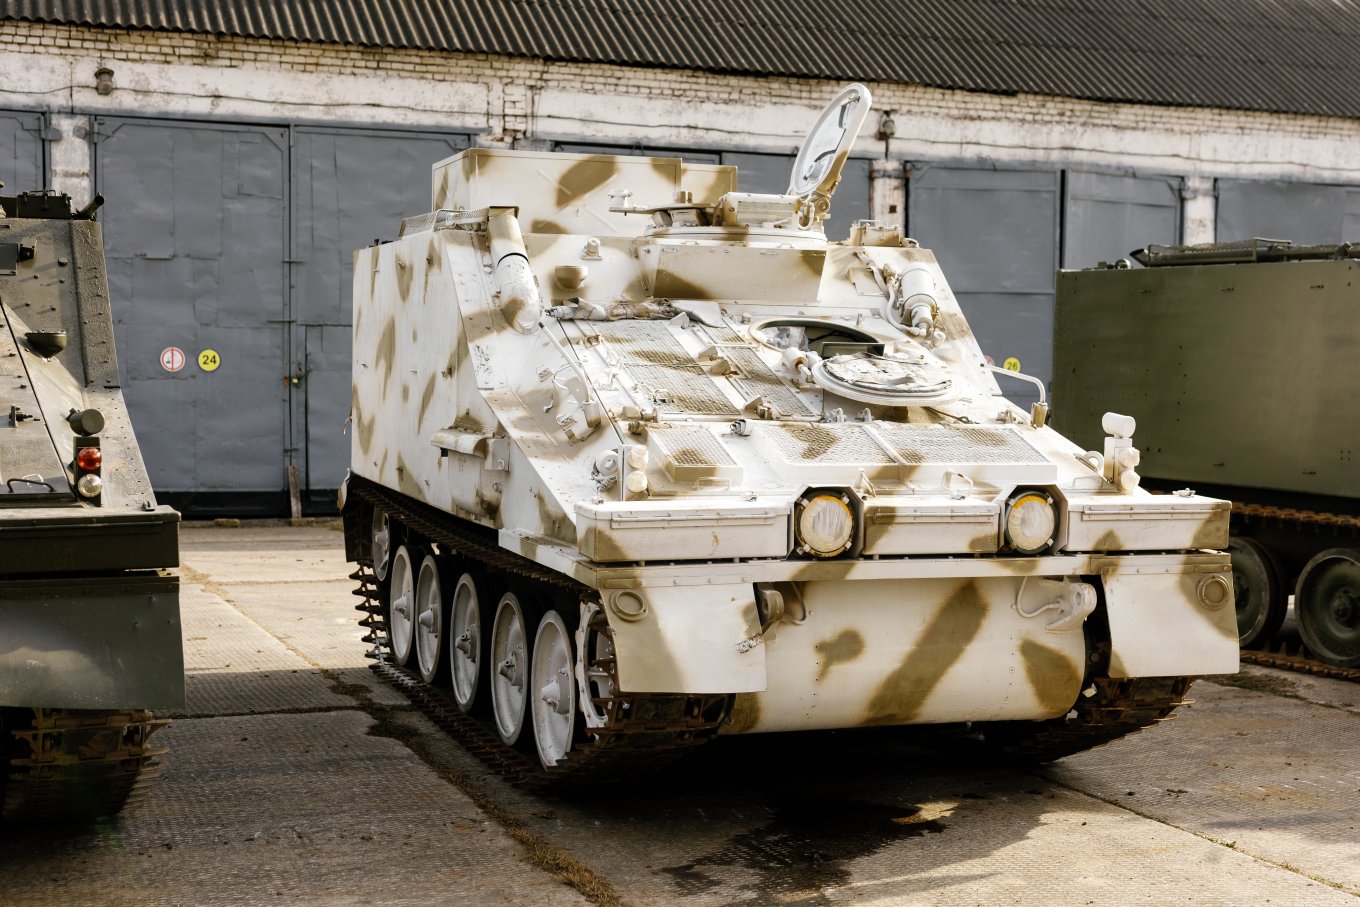 Sultan command vehicle